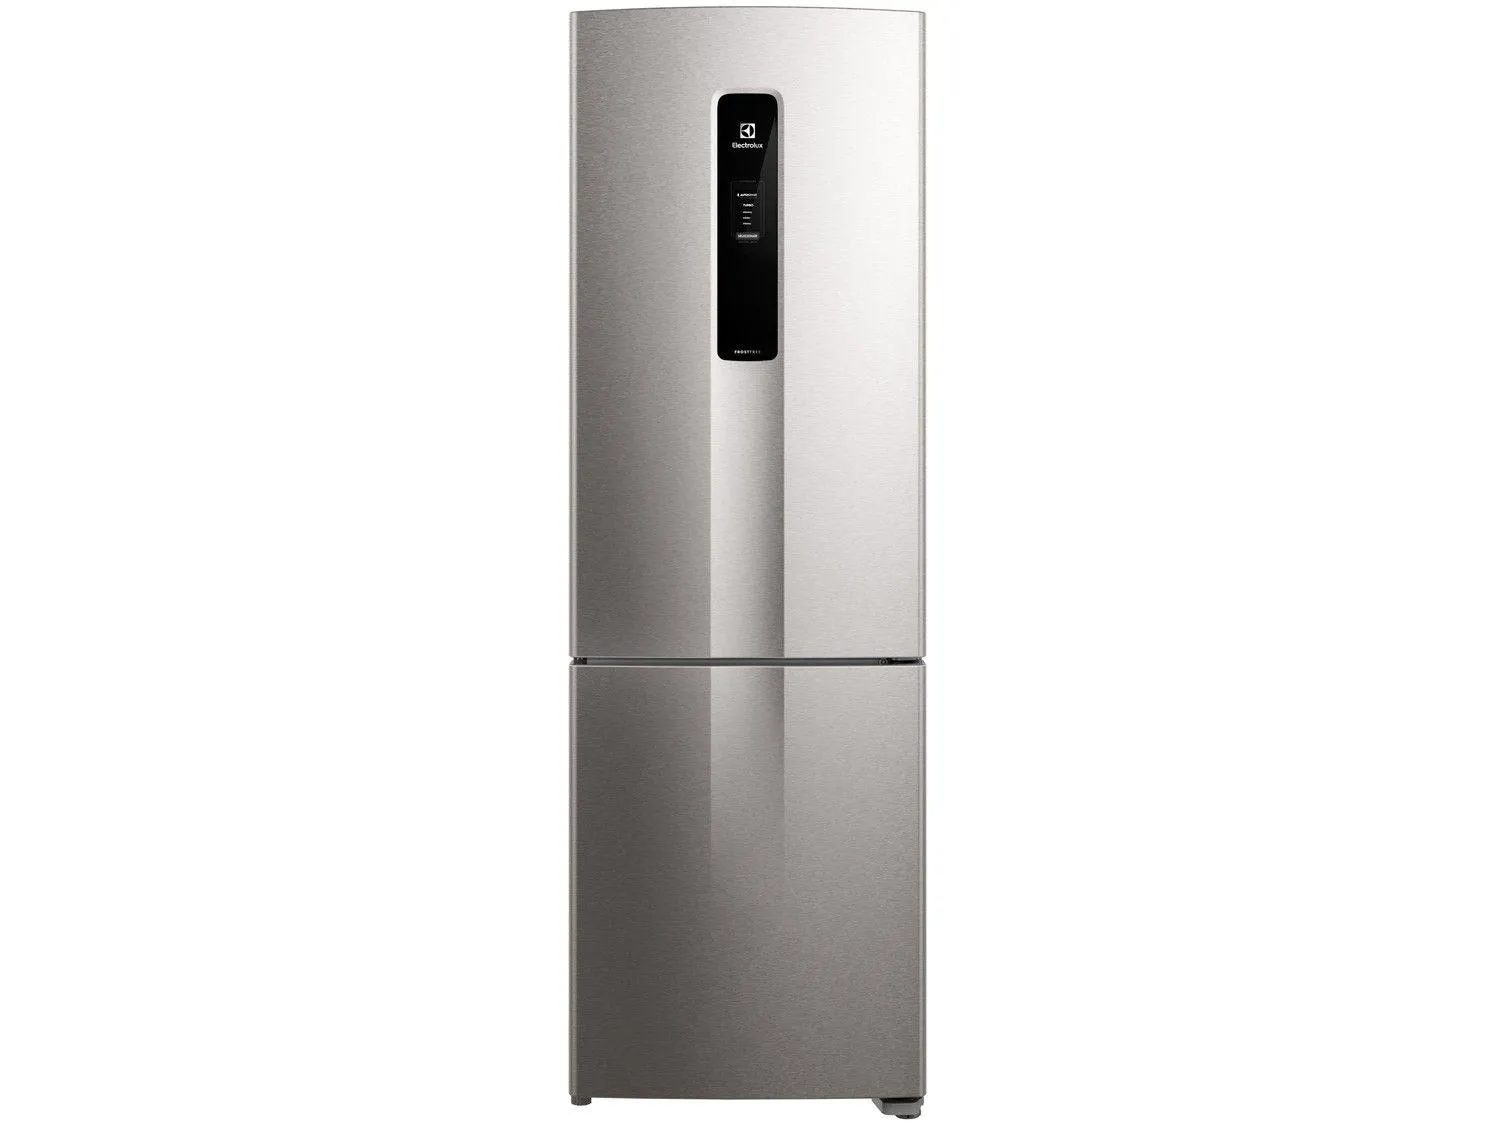 Geladeira/Refrigerador Electrolux Frost Free